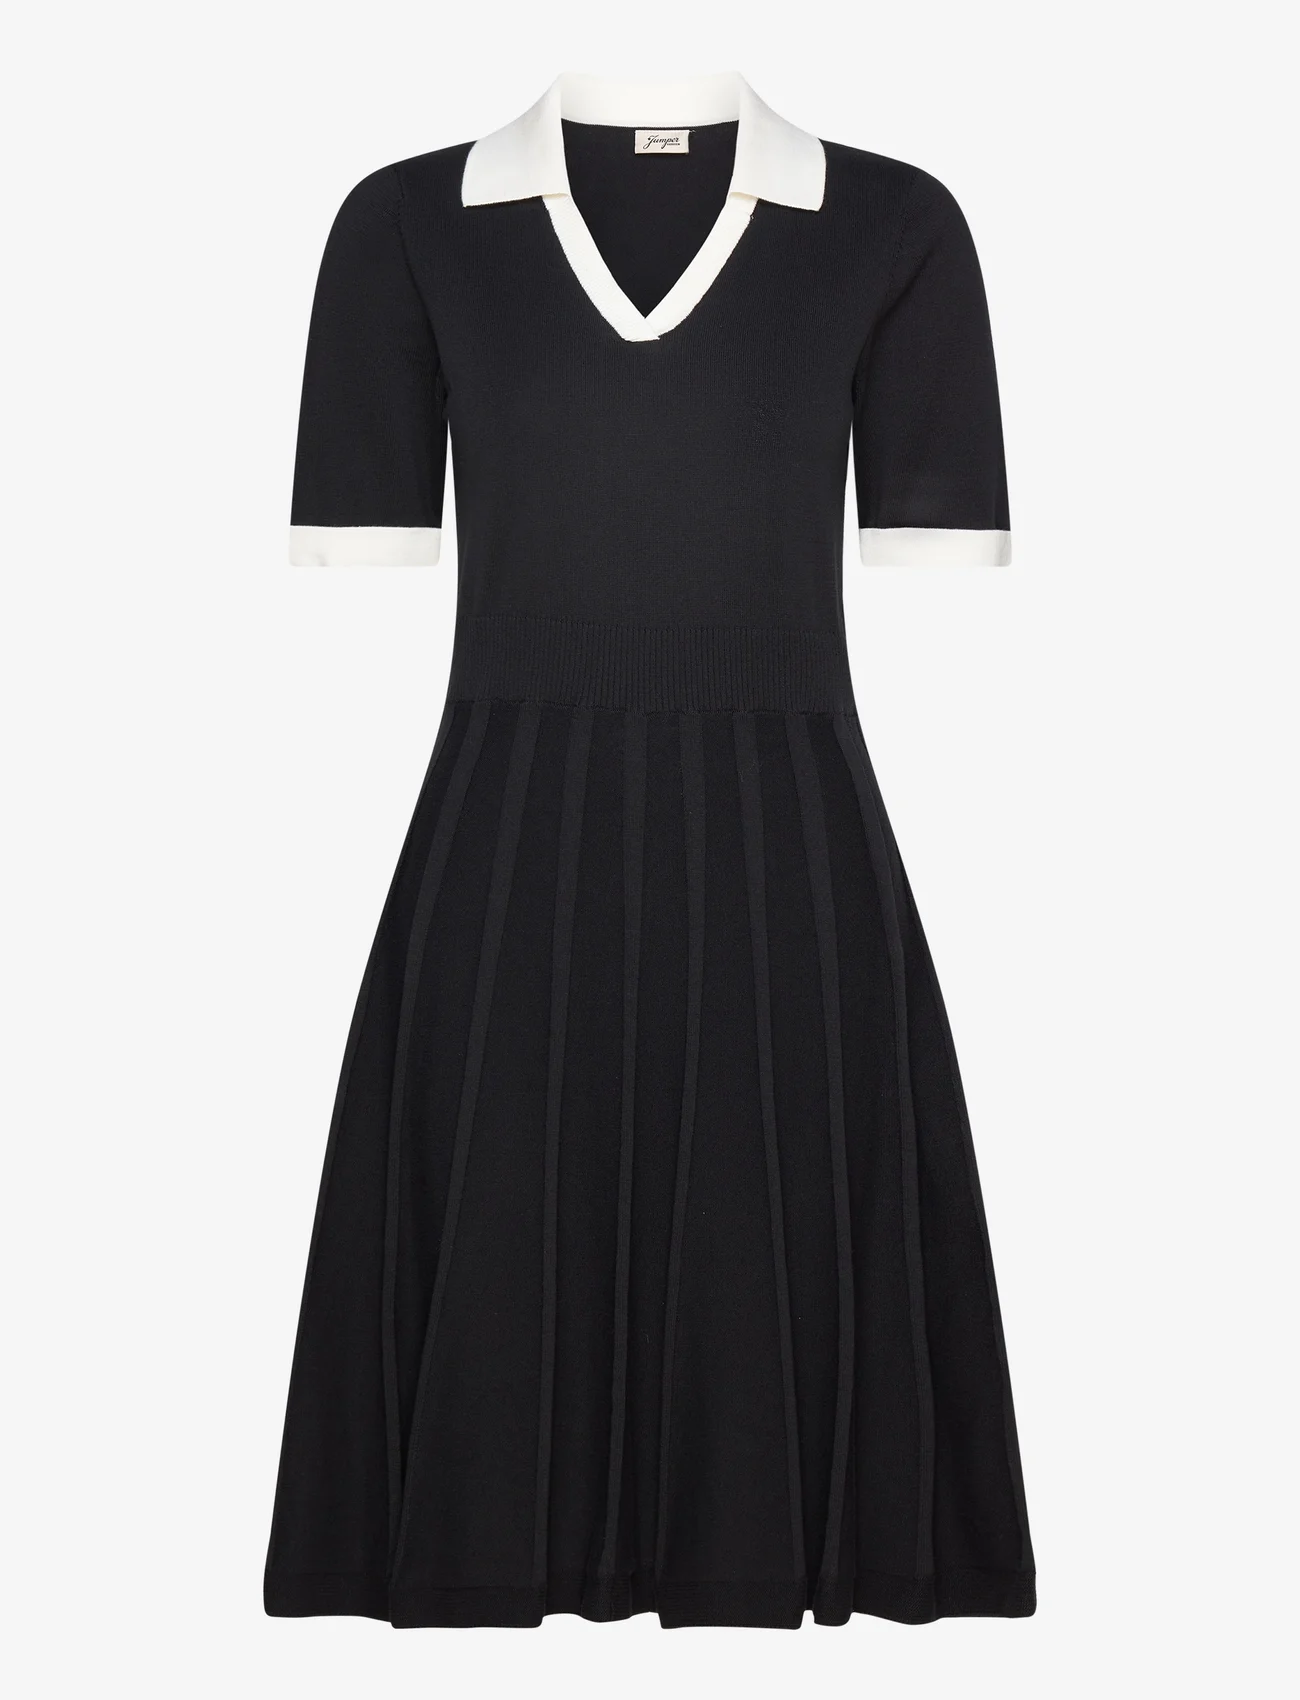 Jumperfabriken - Mallory - knitted dresses - black - 0